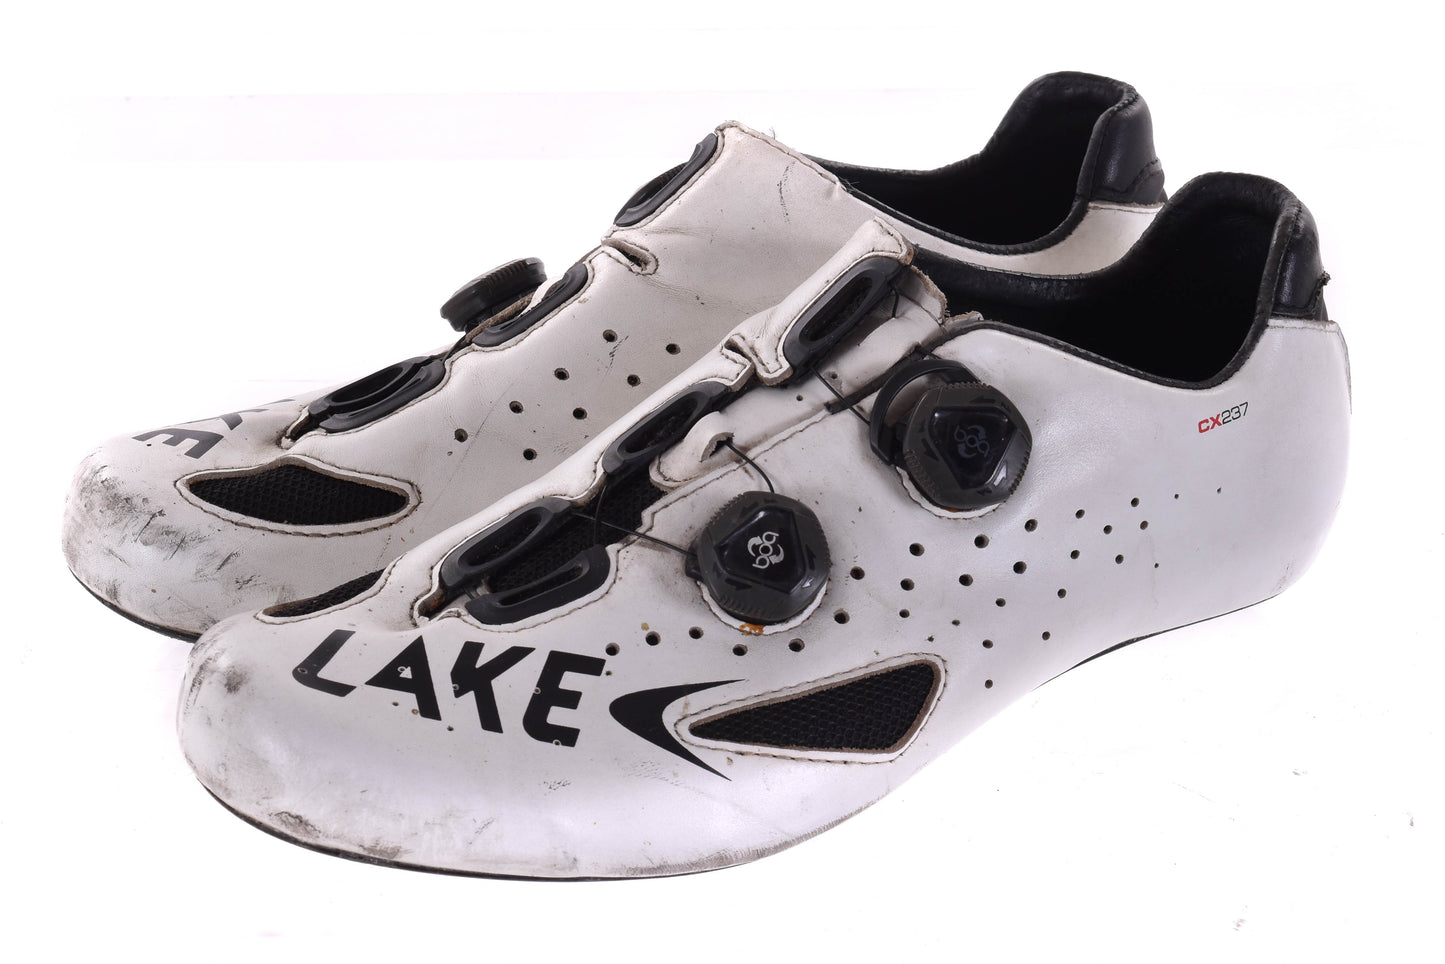 USED Lake CX237 Road Cycling Shoes EU46 US12 Carbon Sole Boa White